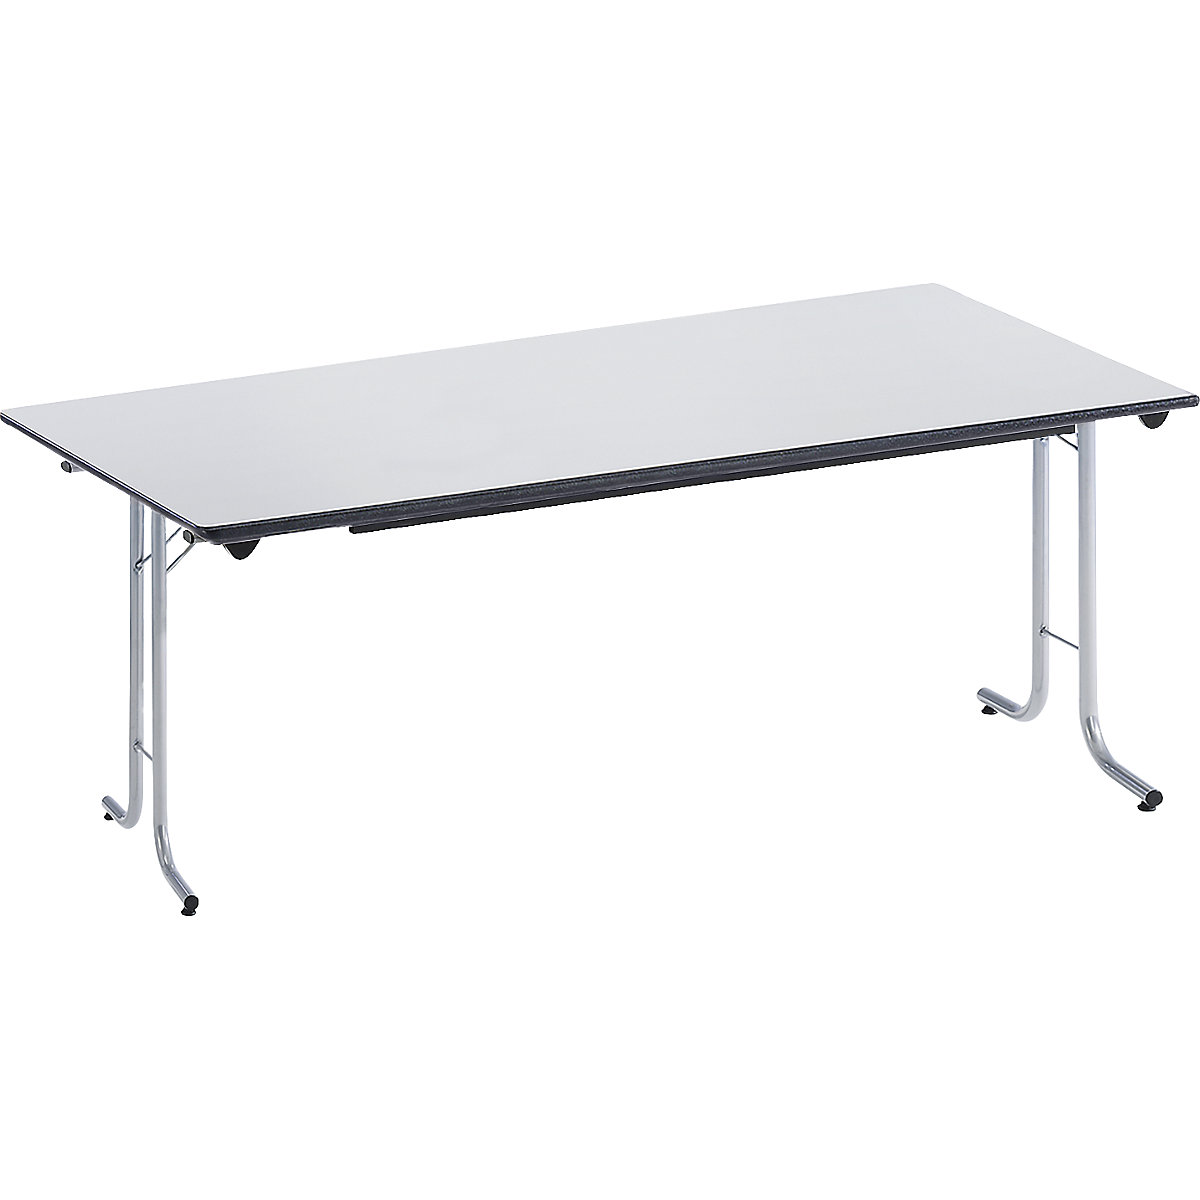 Folding table, with rounded edges, round tubular frame, rectangular top, 1600 x 700 mm, aluminium coloured frame, light grey tabletop-9